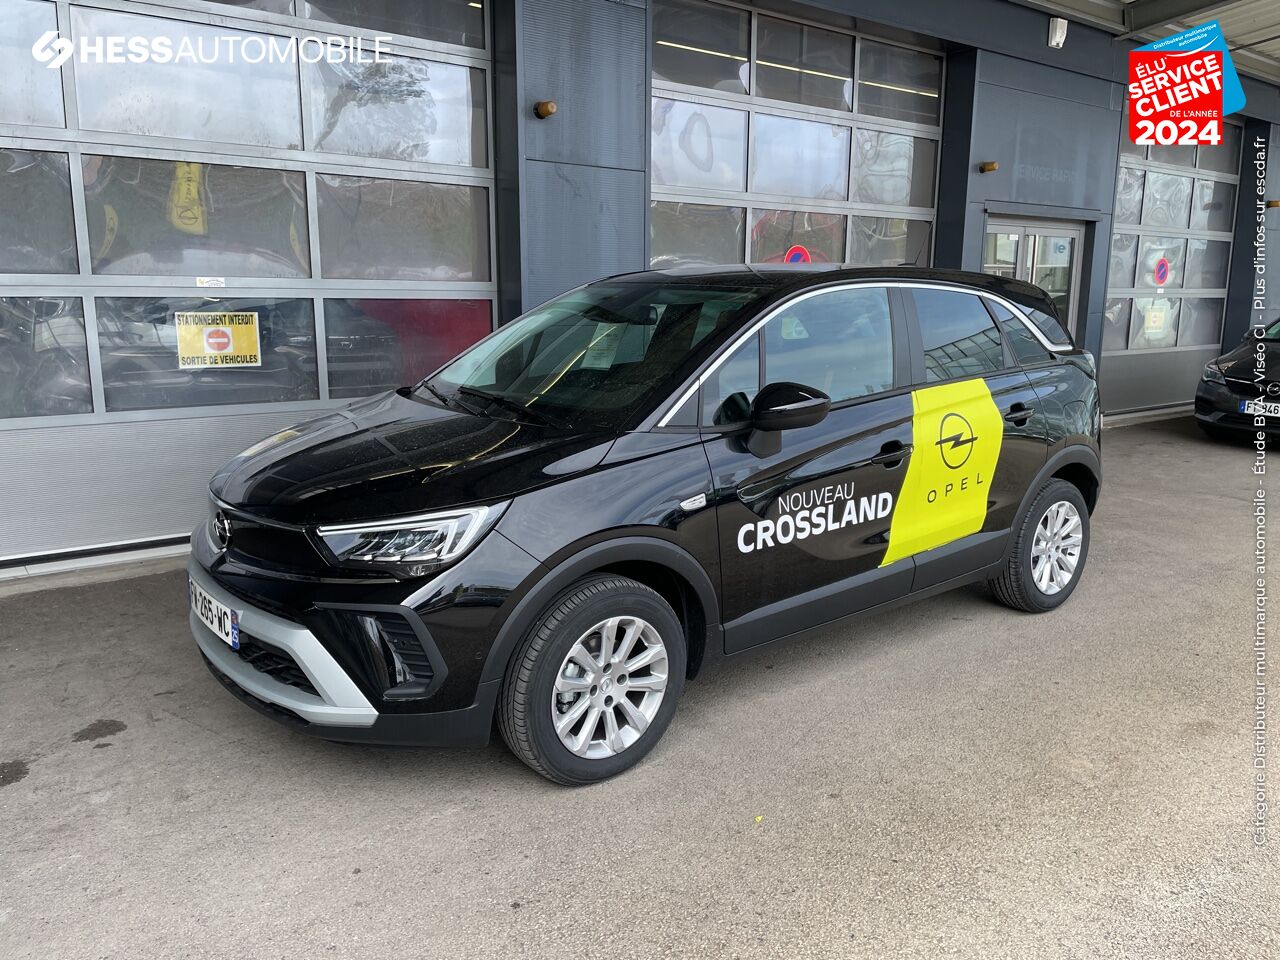 chez Opel Besançon